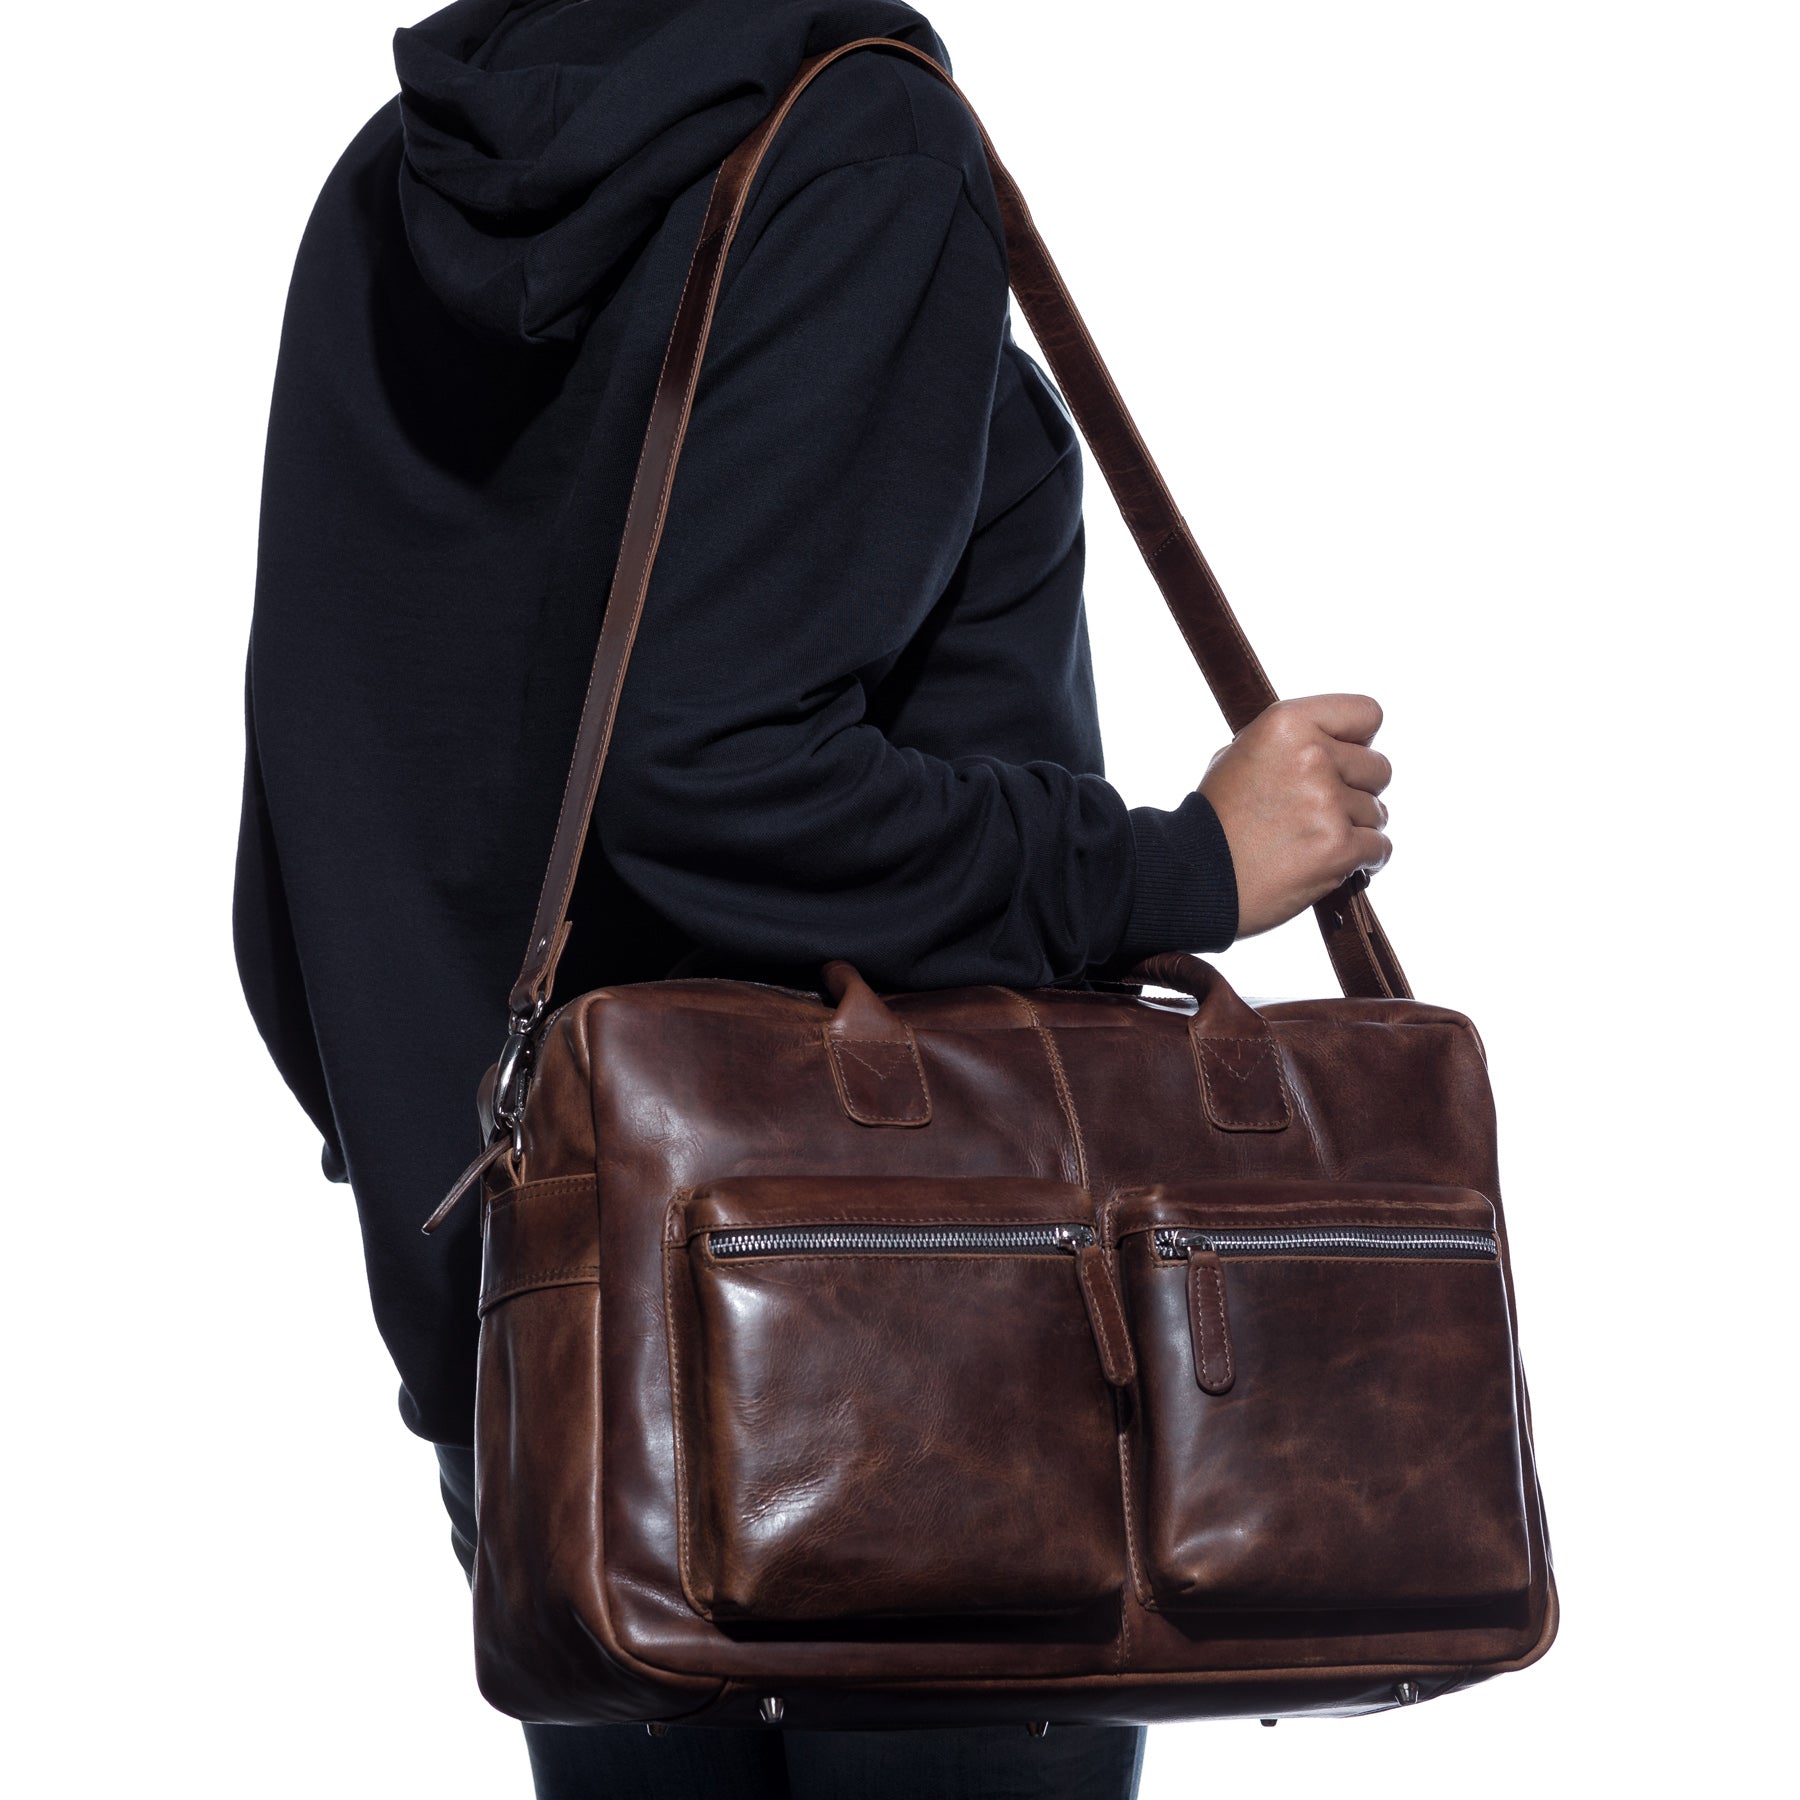 Laptop bag BRIGHTON natural leather brown-cognac